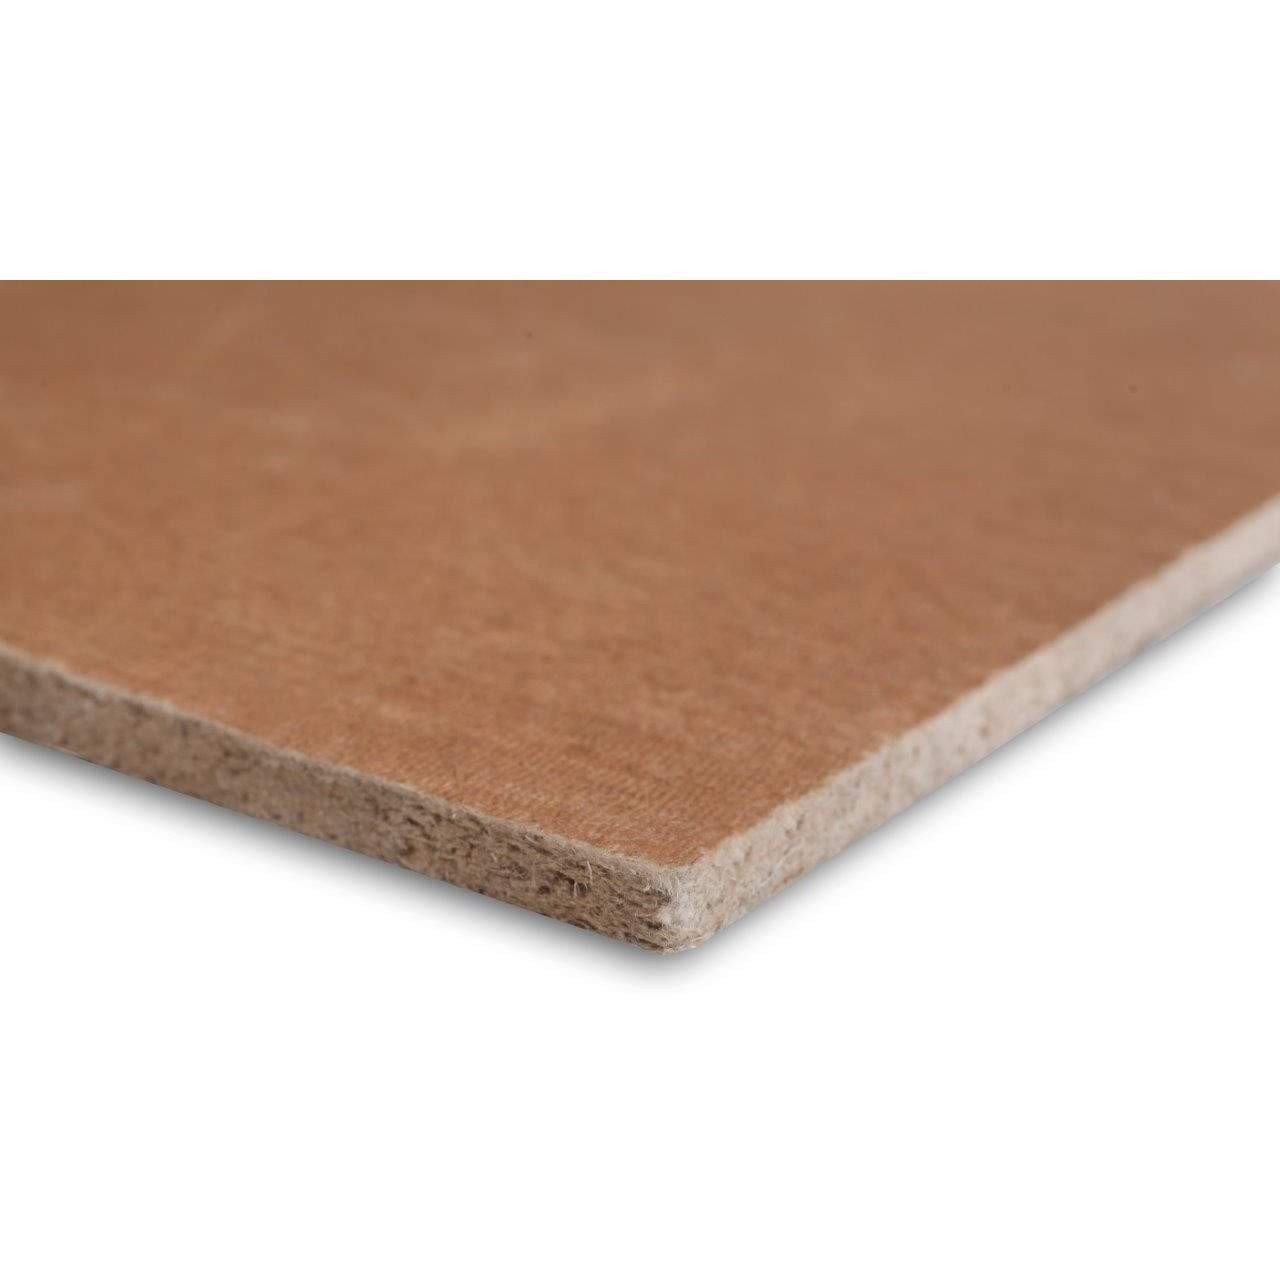 Board Softboard-Lumber & Sheet Stock-Florence-ƒ1.2x2.4𝑚 x 𝑇12𝑚𝑚-diyshop.co.za